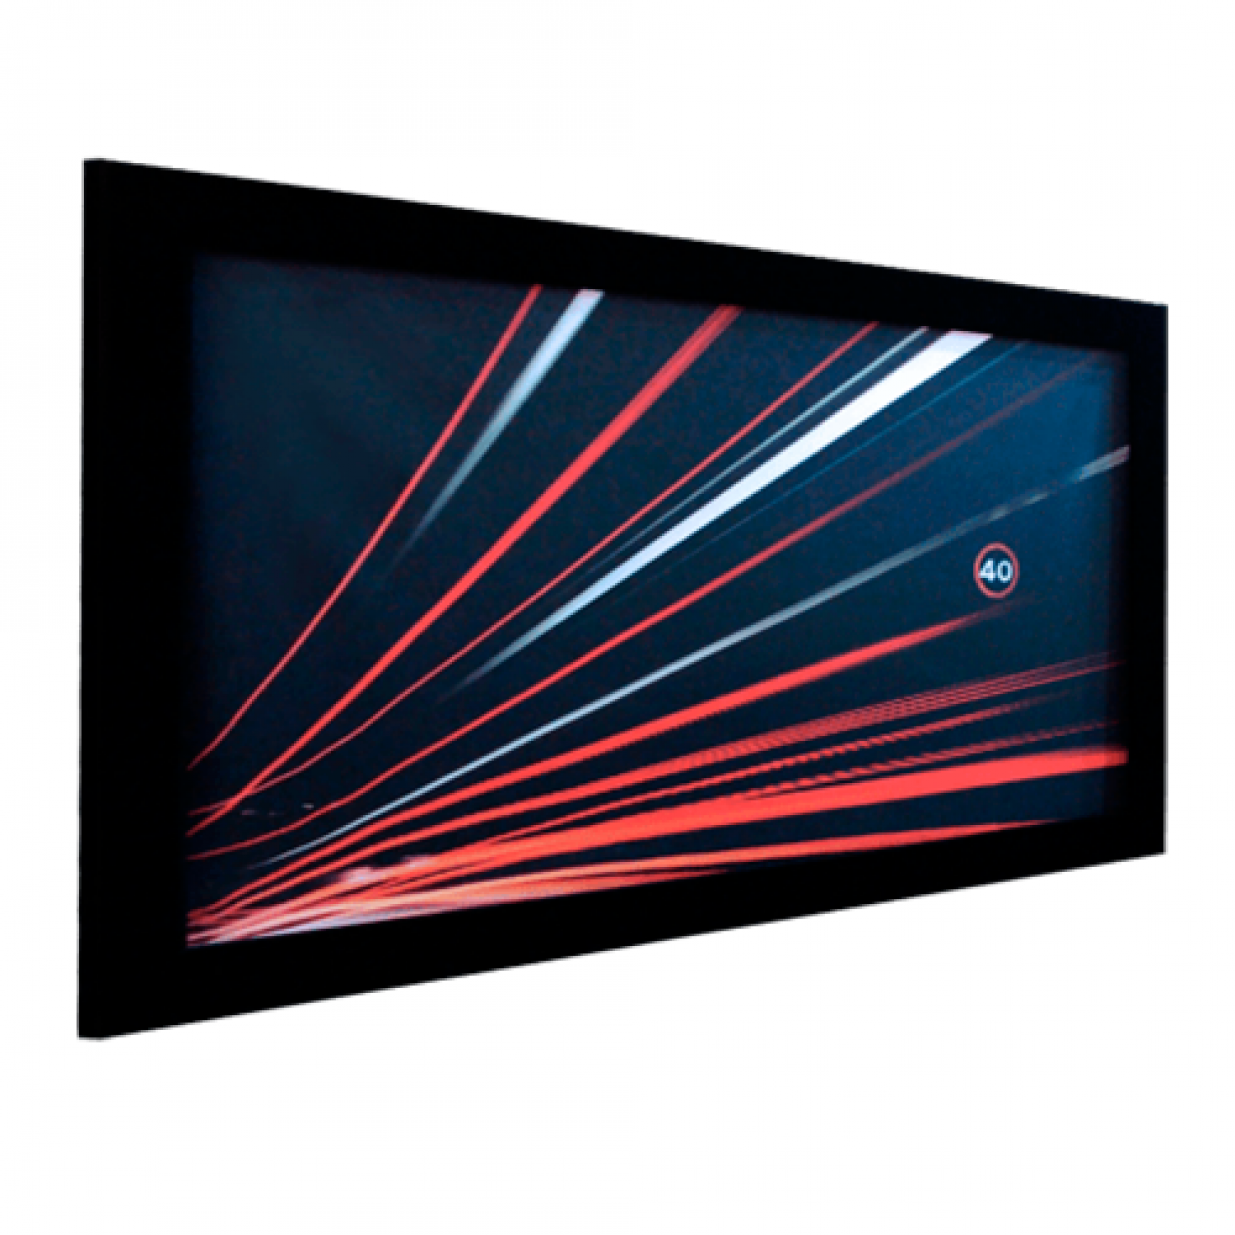 Display technology. Стационарный дисплей. Xtech Technology монитор. 330 См экран. 15 SM display.